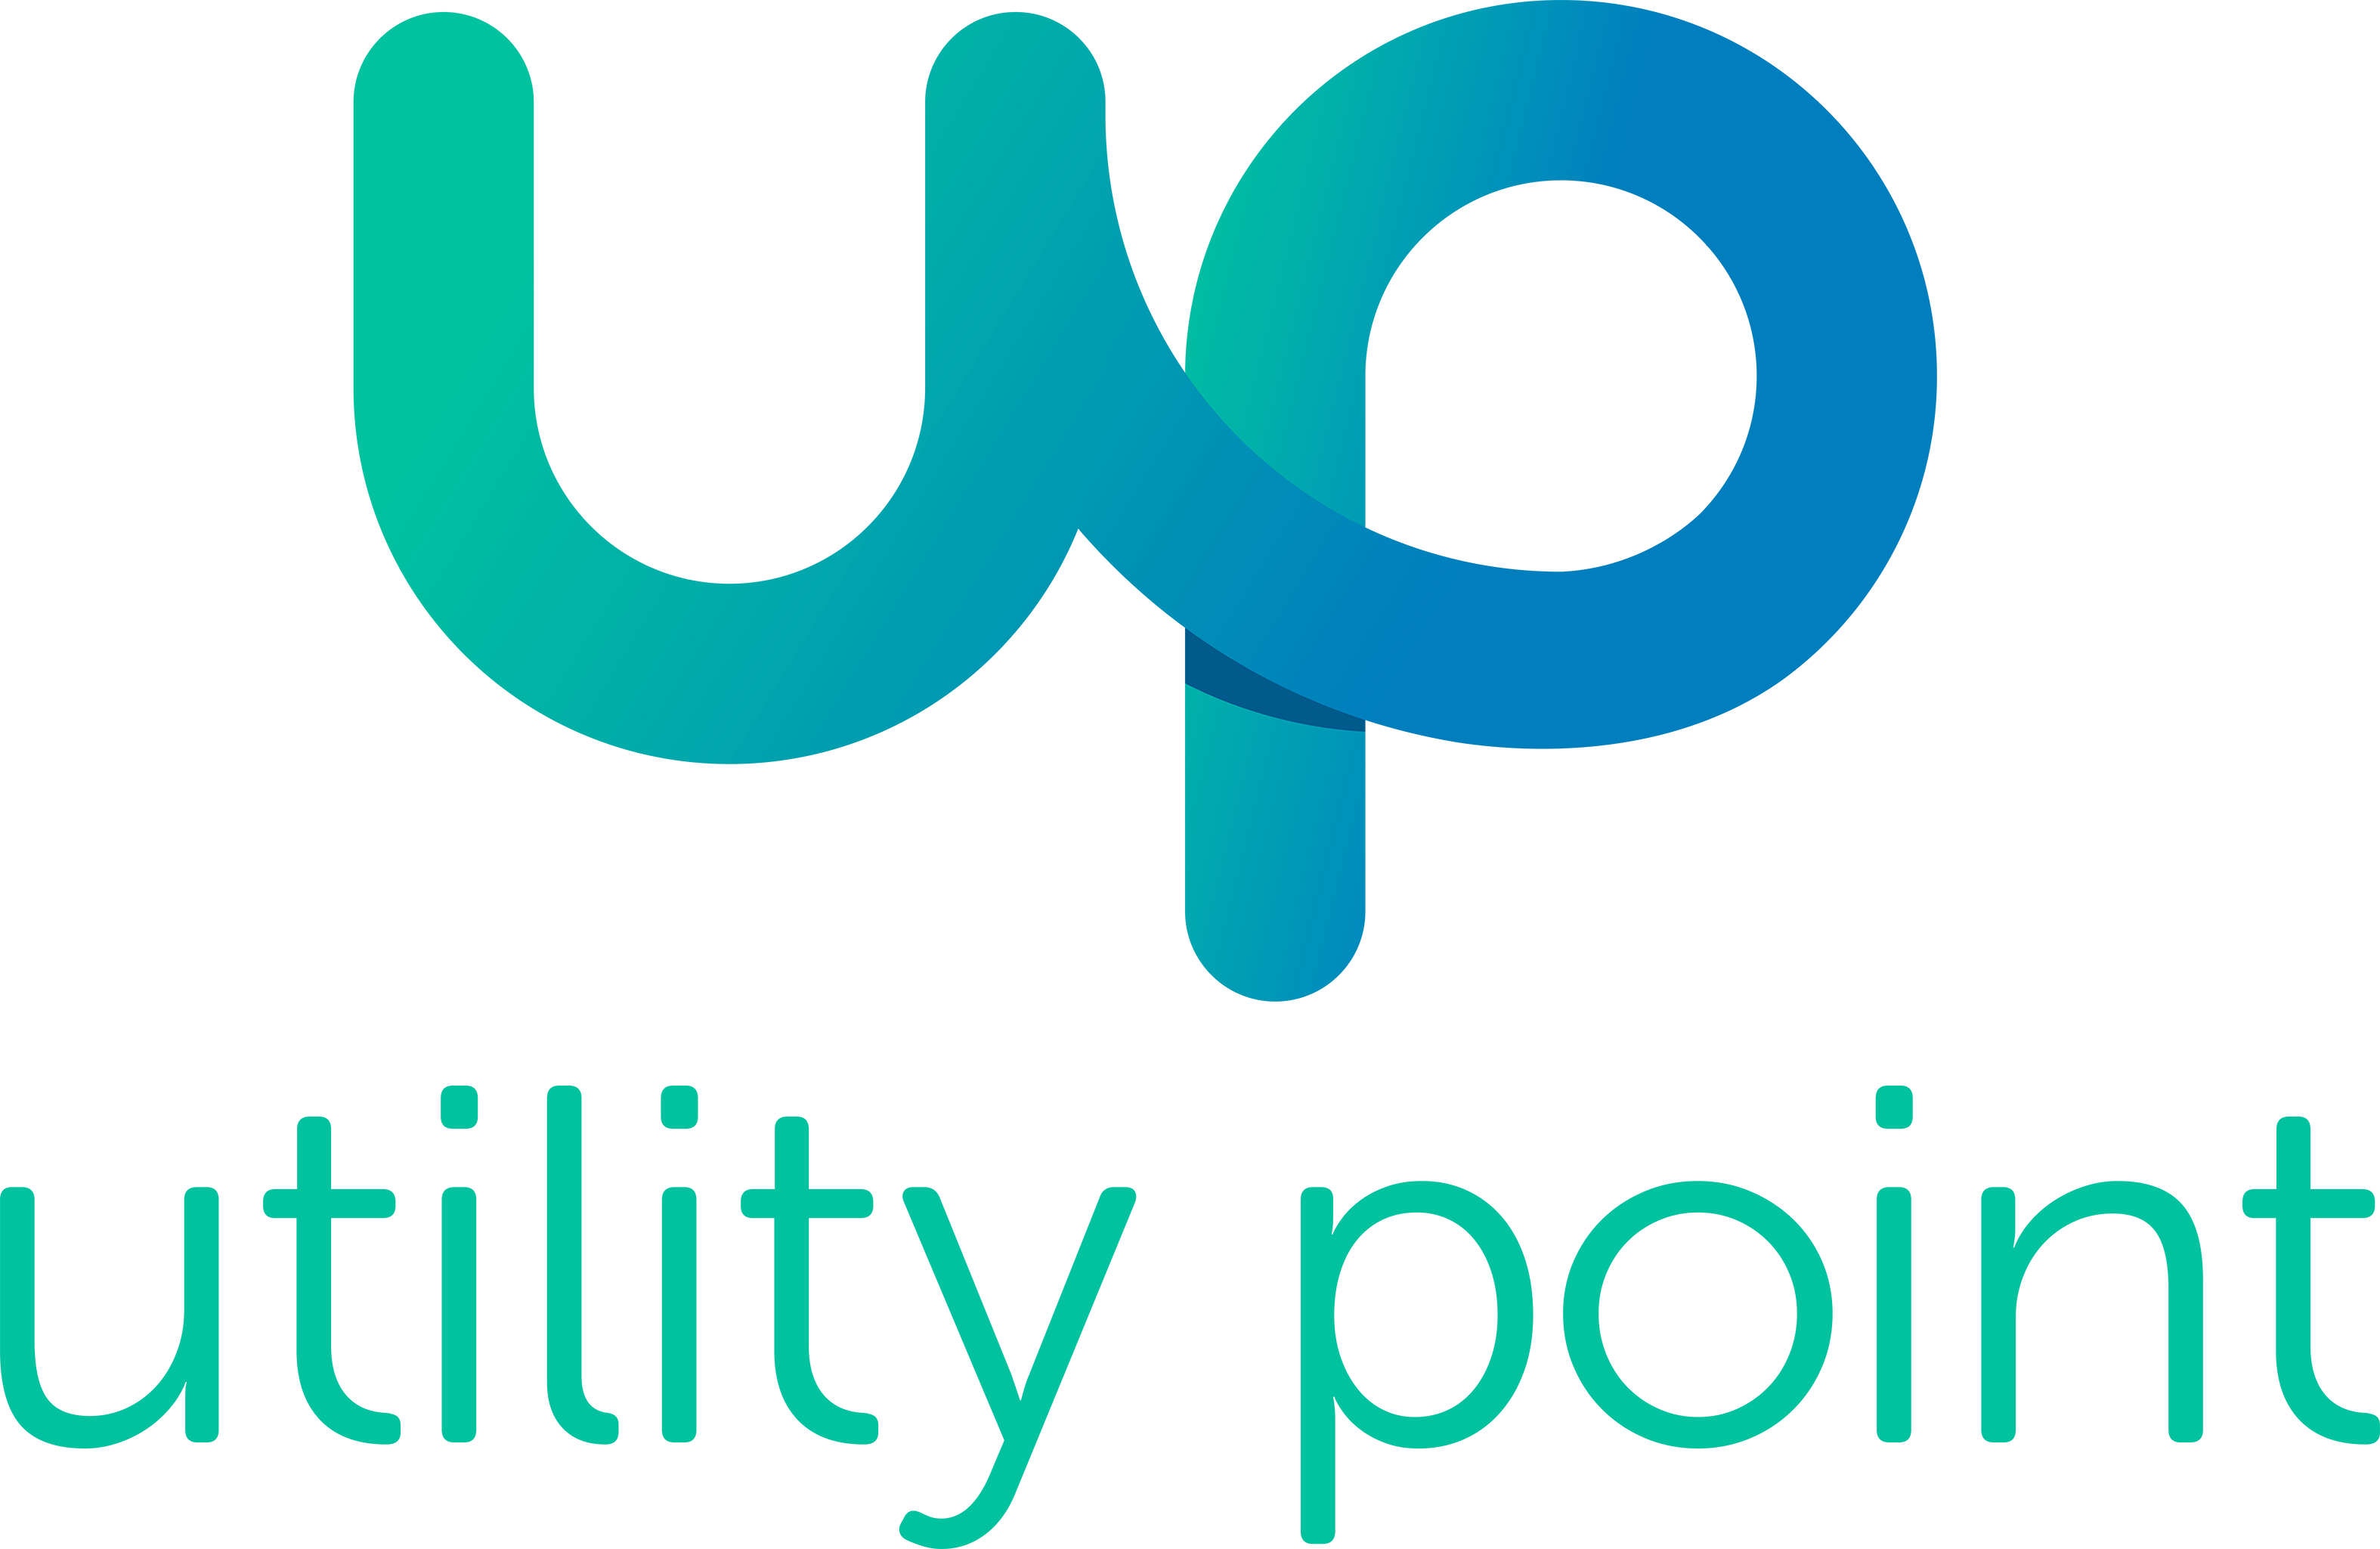 Utility Point energy company logo